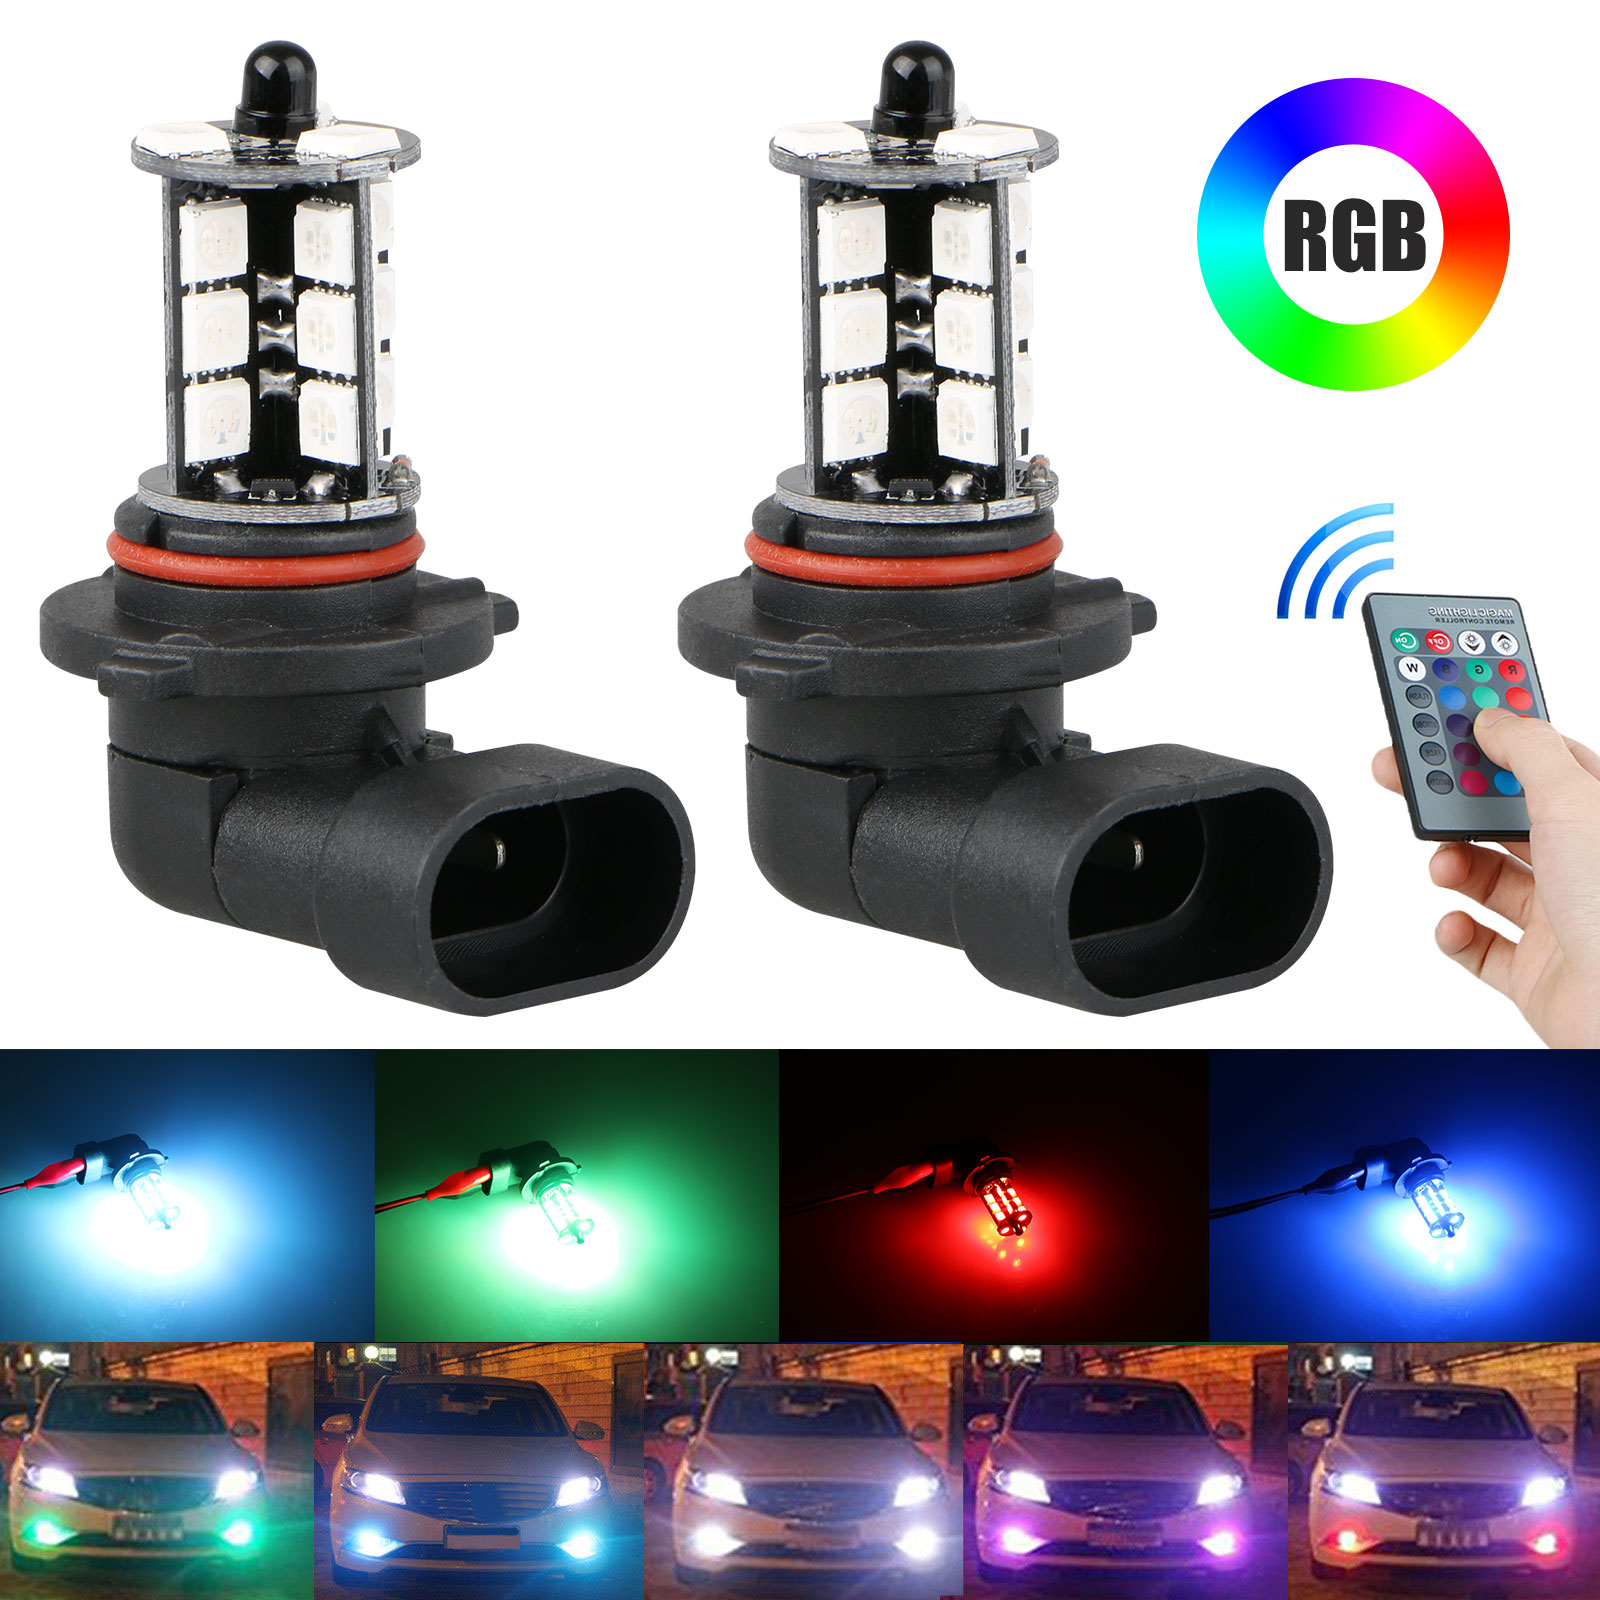 2x 9005 5050 LED 27 SMD RGB Car Headlight Fog Light Lamp Bulb Remote Control